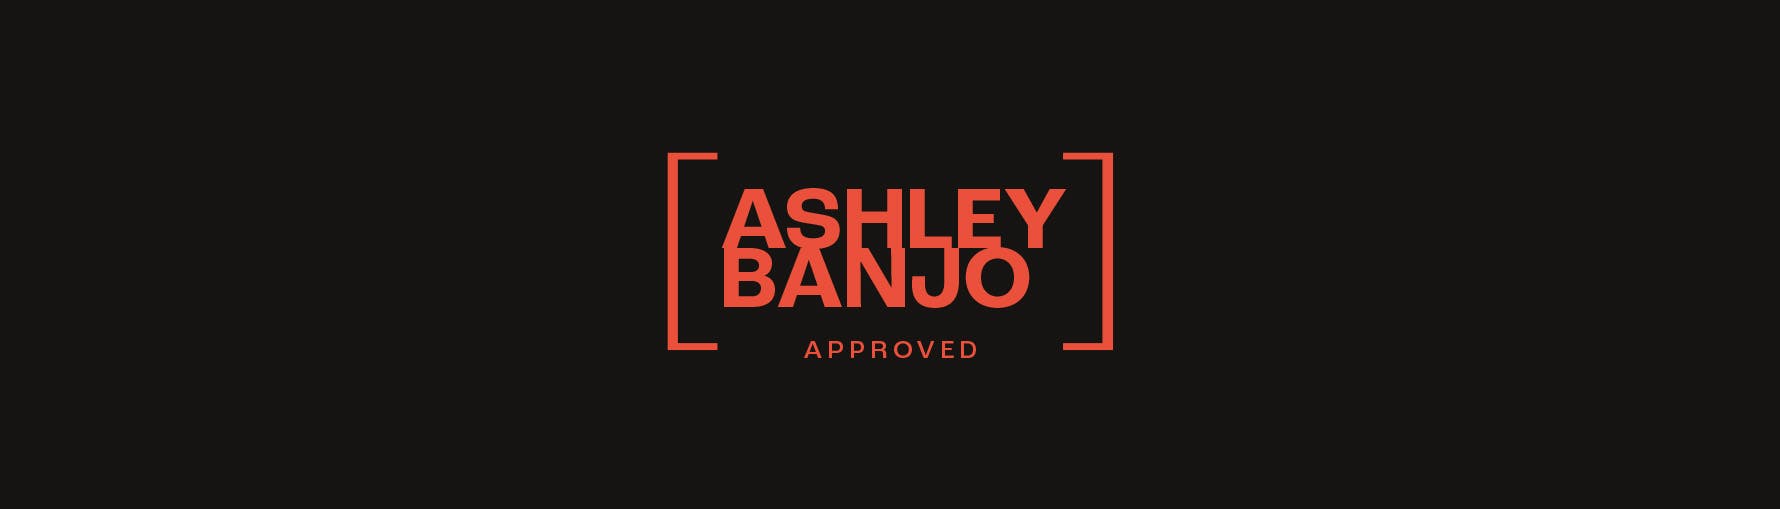 Ashley Banjo Edit